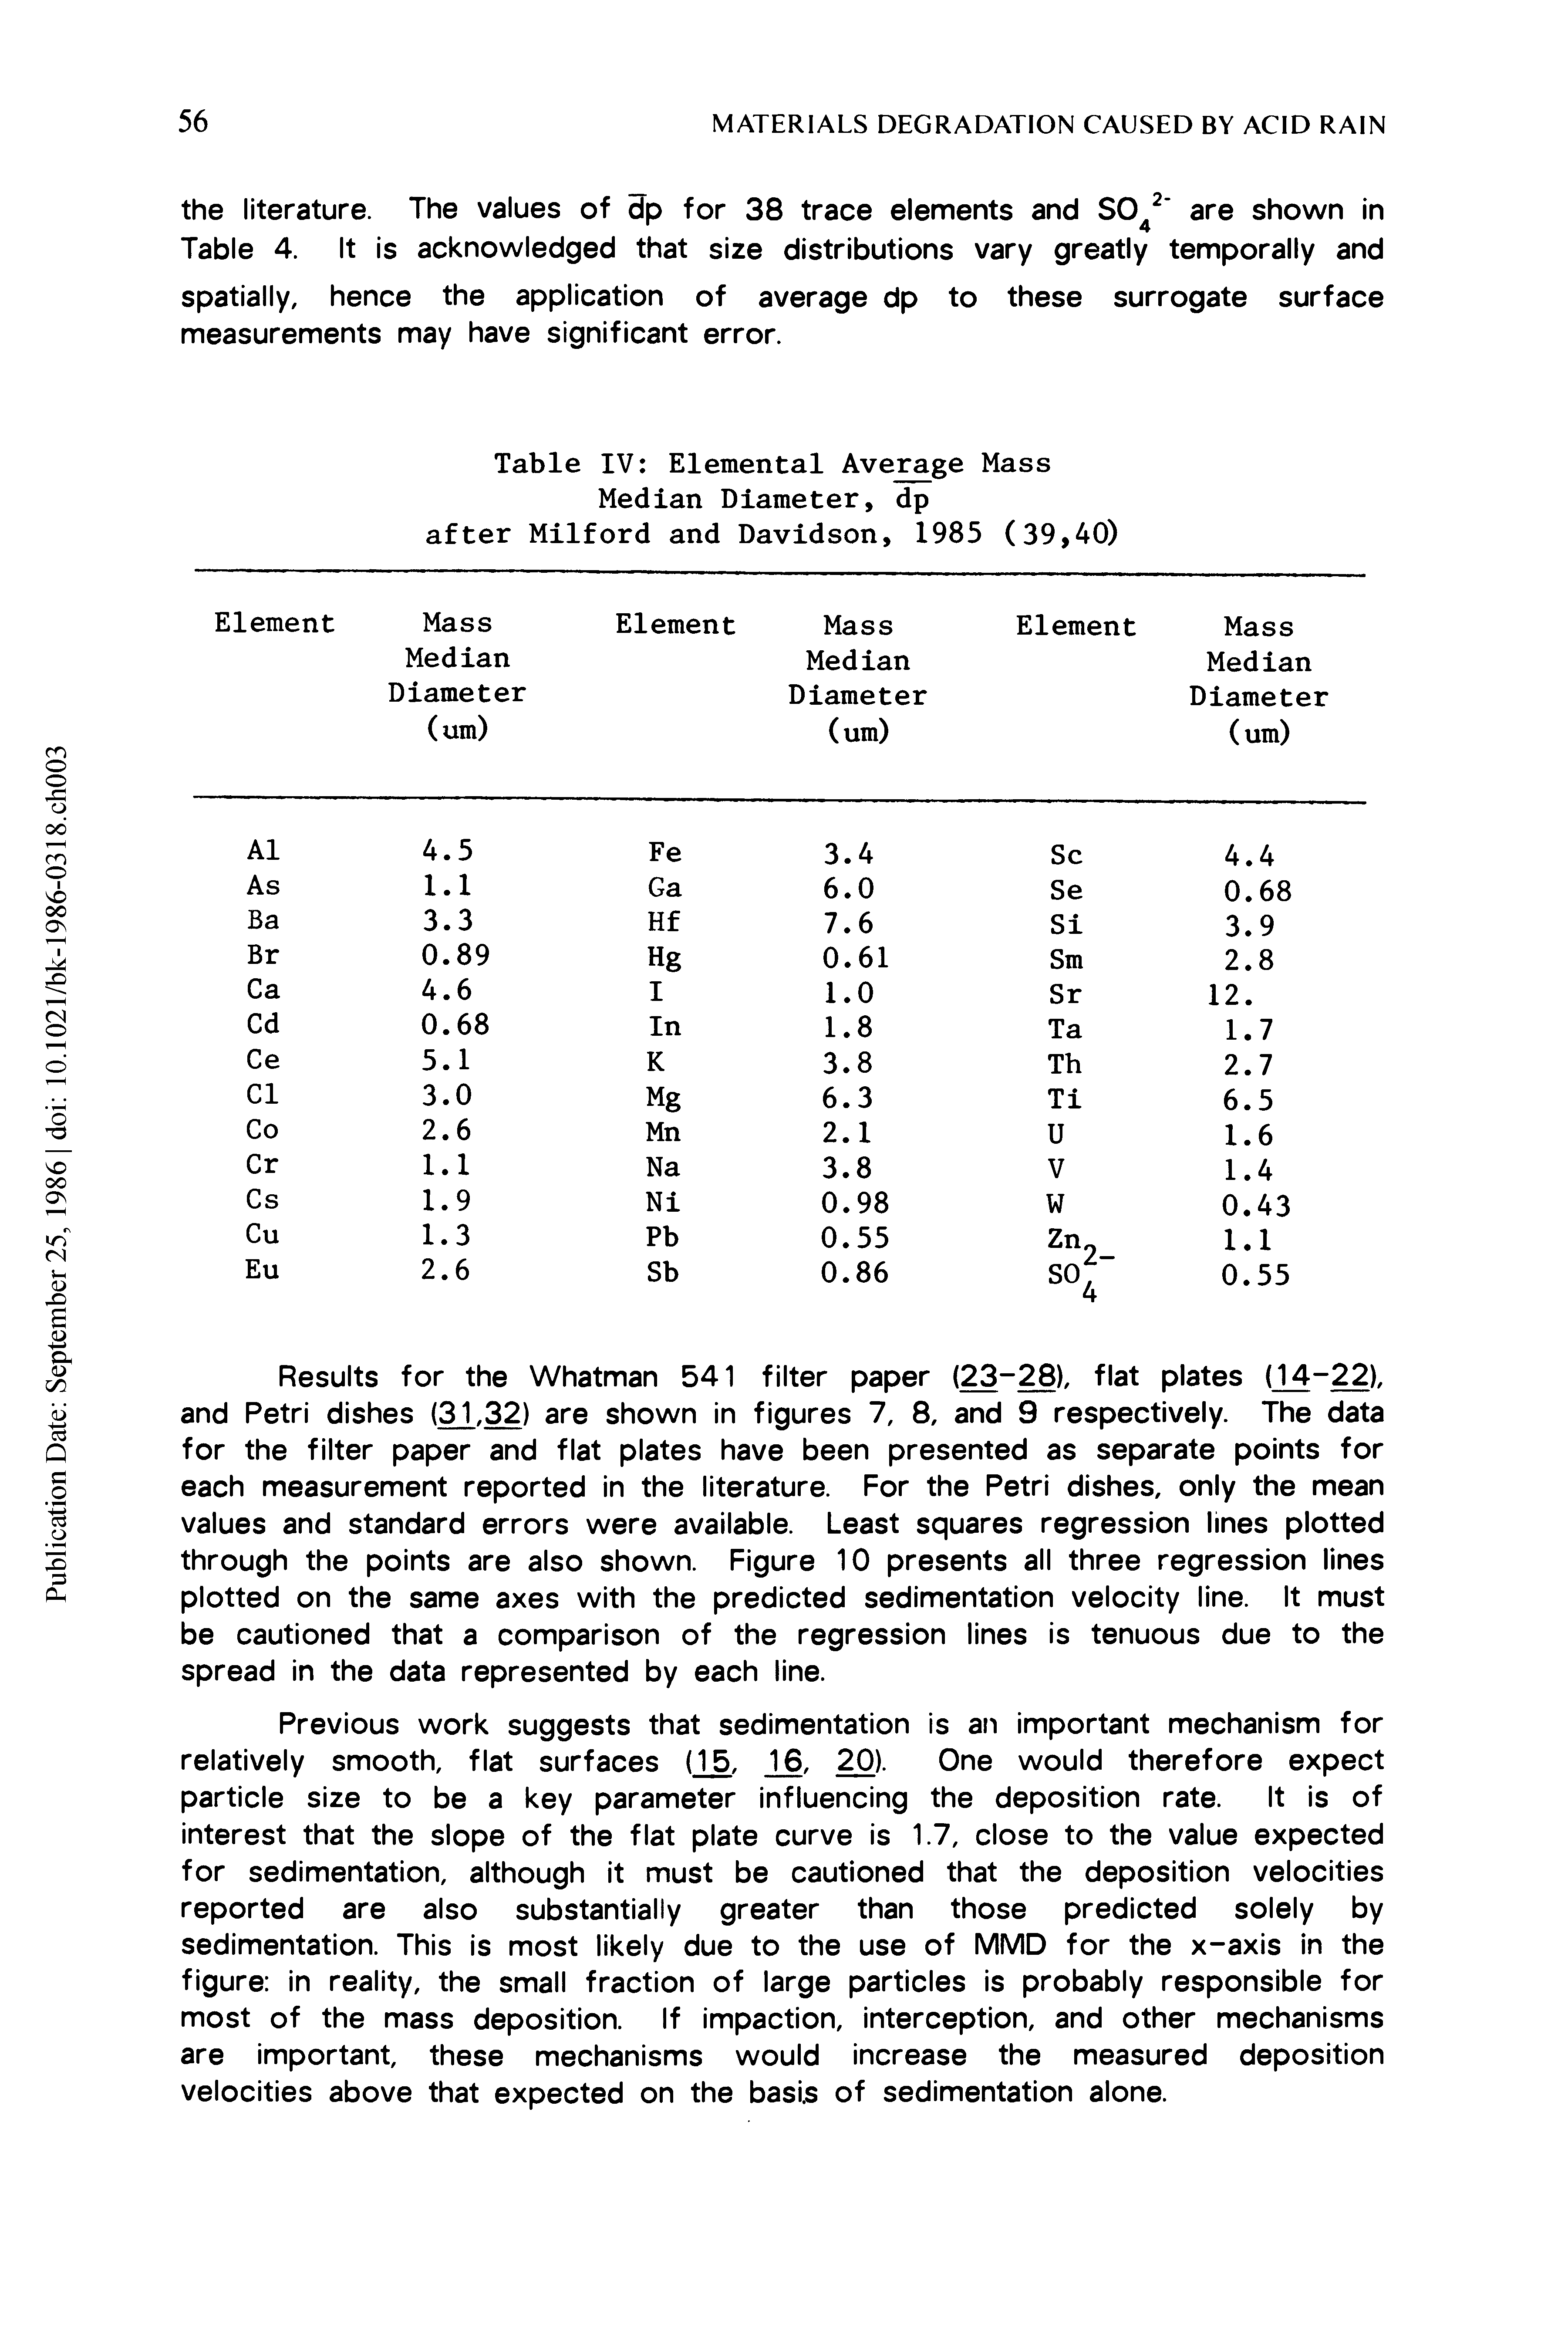 Table IV Elemental Average Mass Median Diameter, dp...